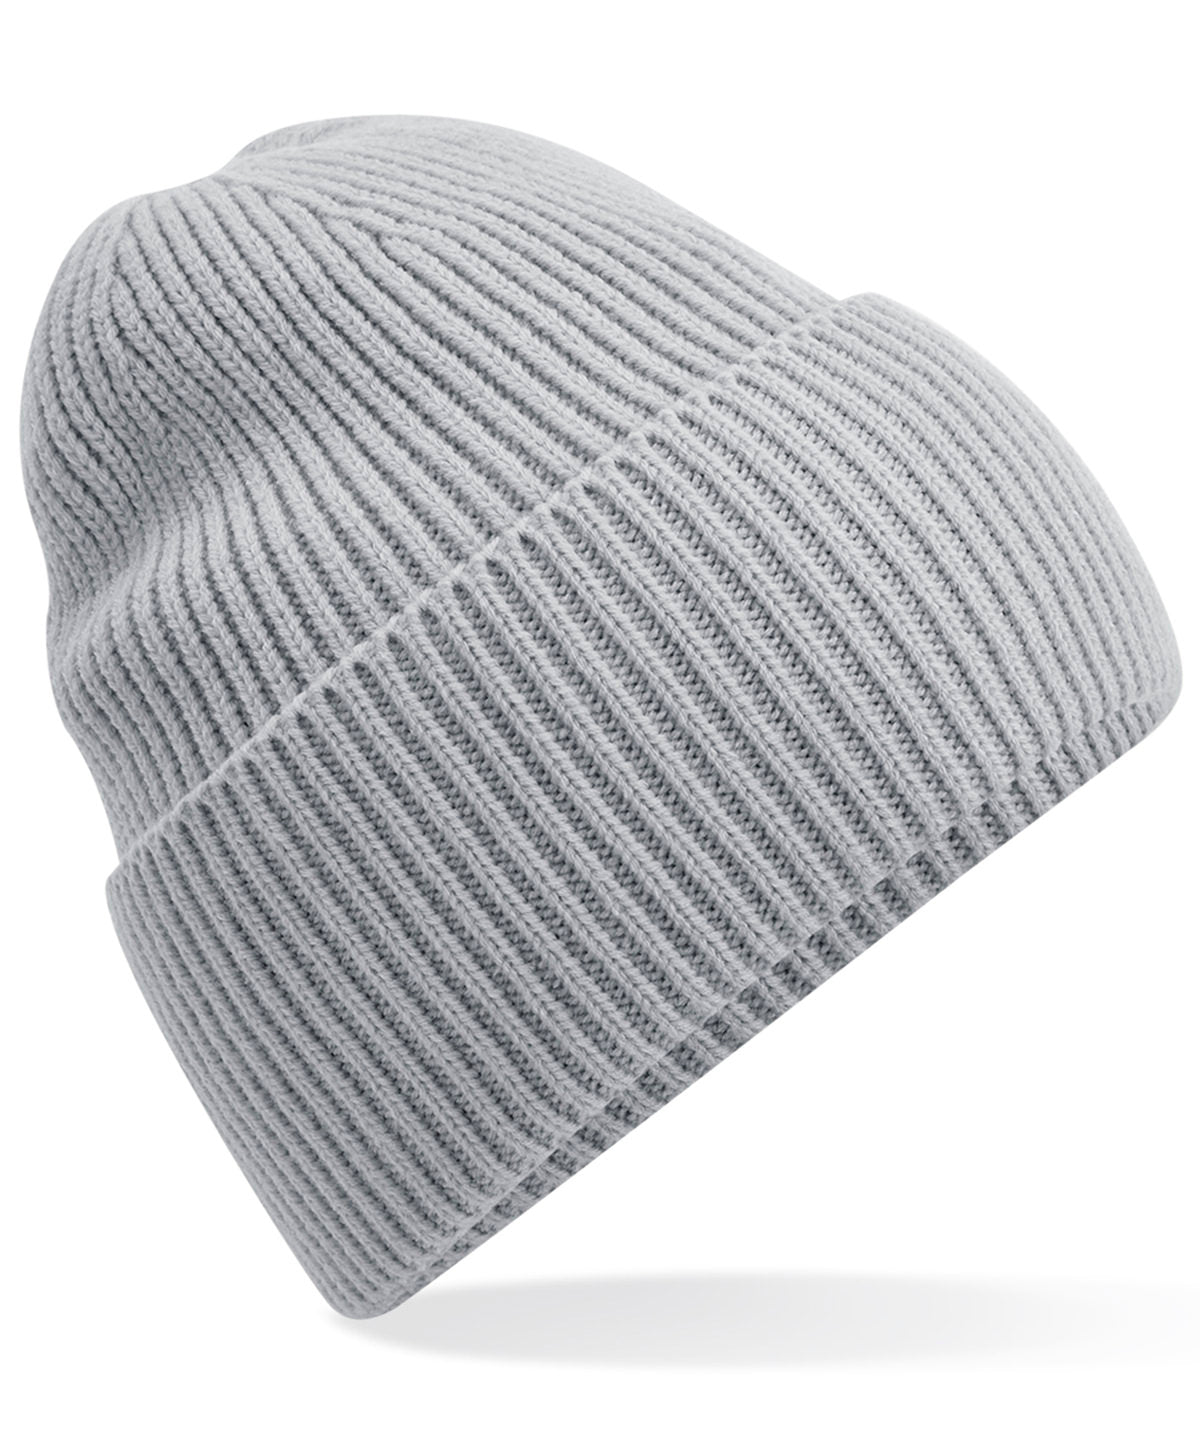 Personalised Hats - Light Grey Beechfield Oversized cuffed beanie